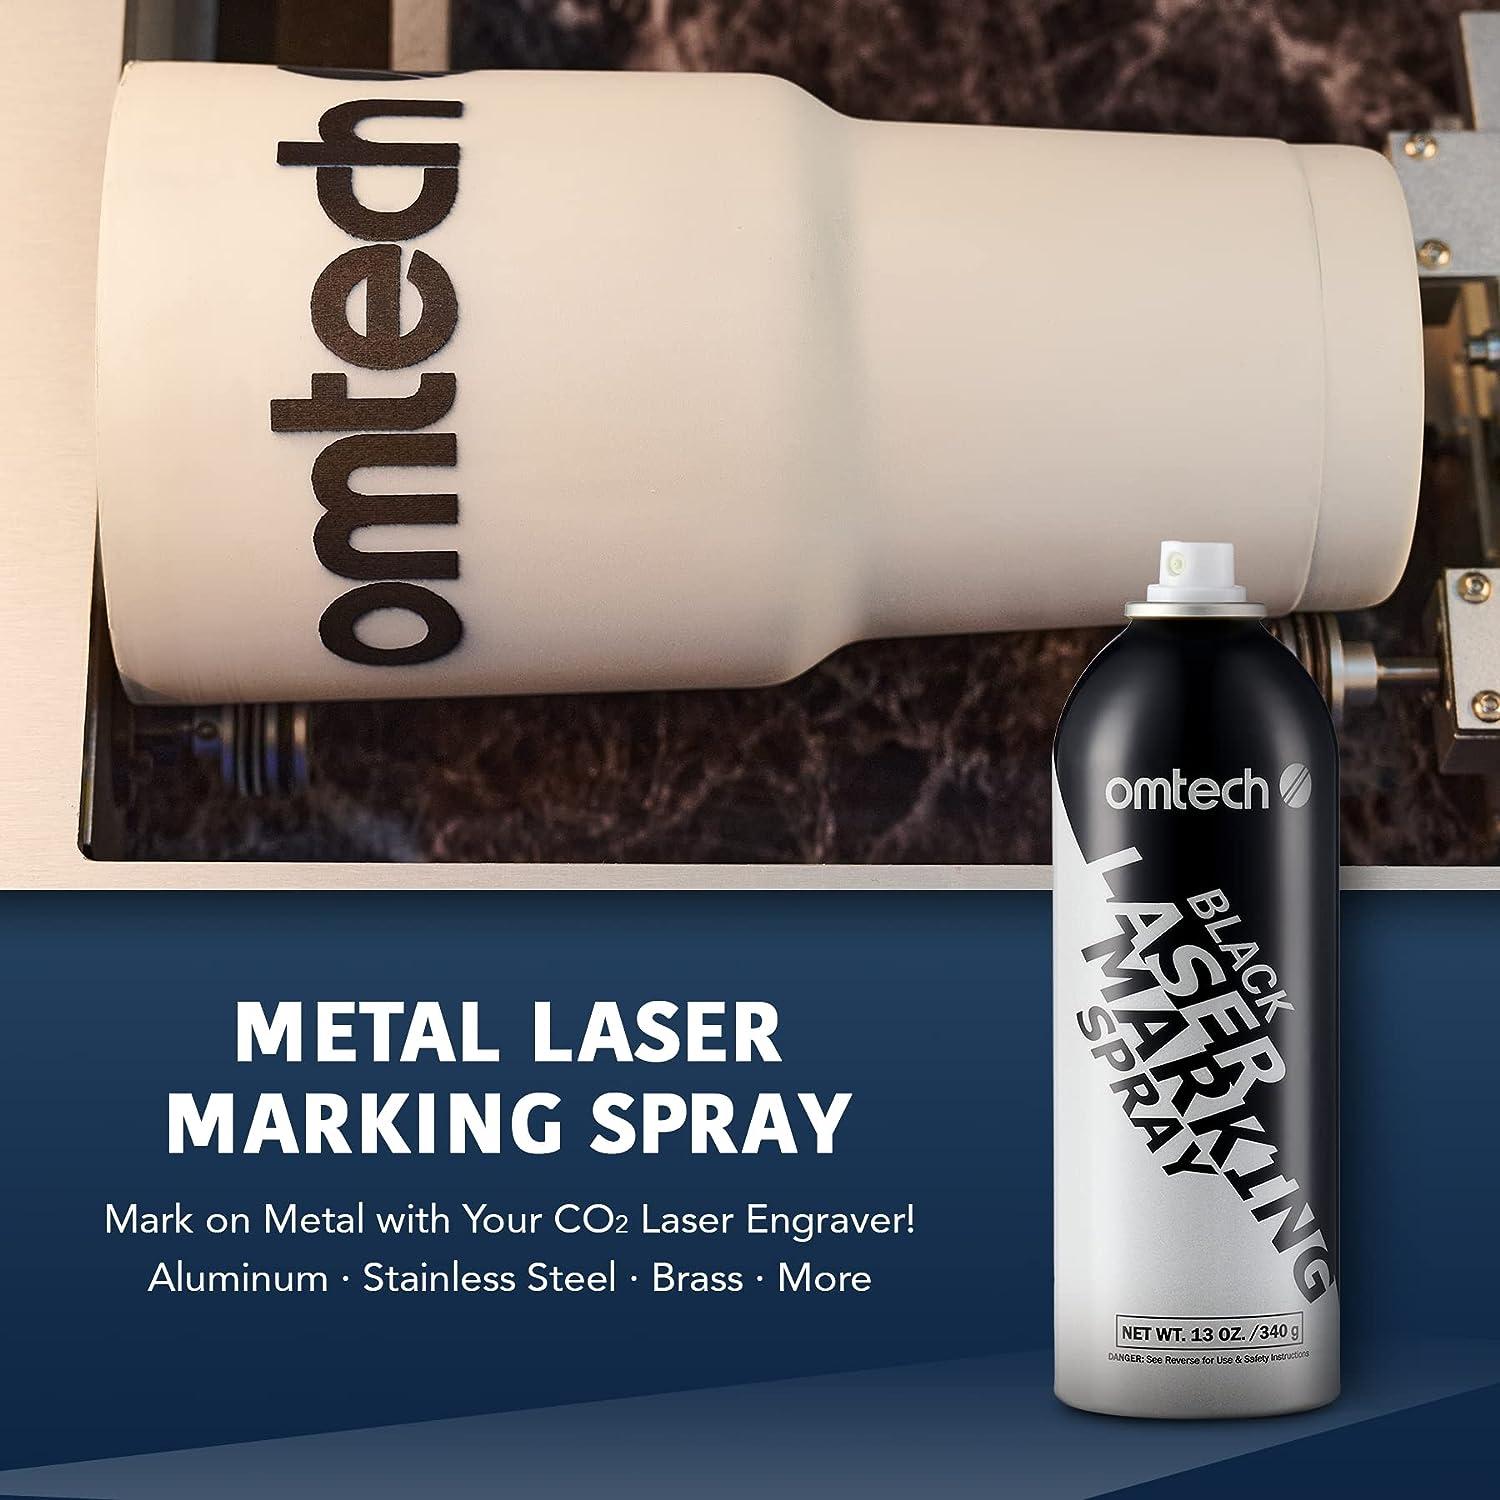 CO2 Laser Engravers, Fiber Lasers, and More - OMTech Laser